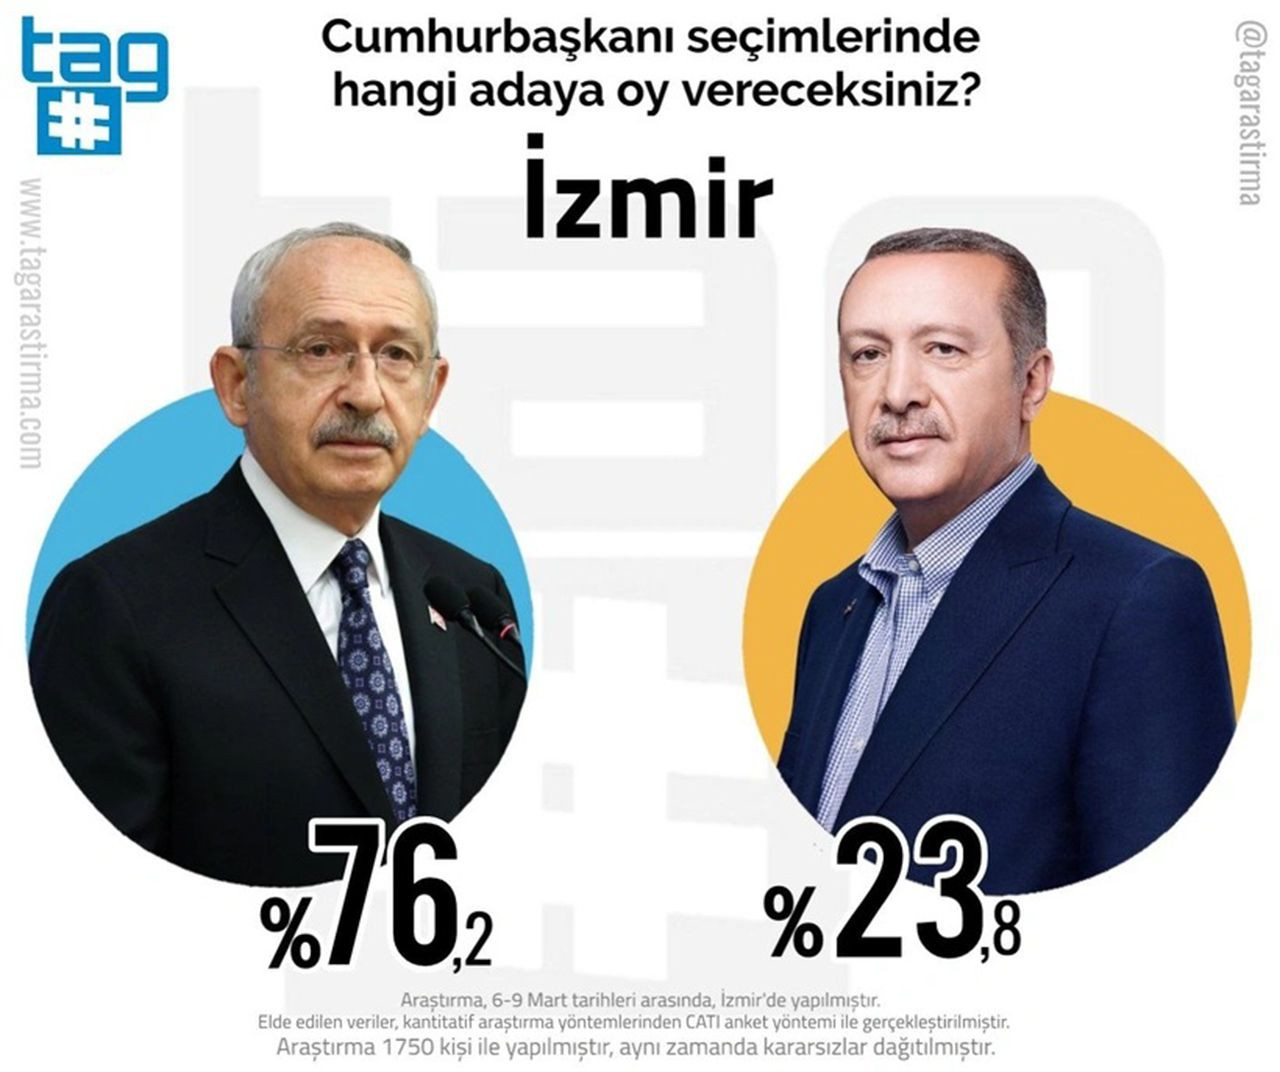 İl il Cumhurbaşkanlığı seçimi anketi sonuçları açıklandı - Resim: 8